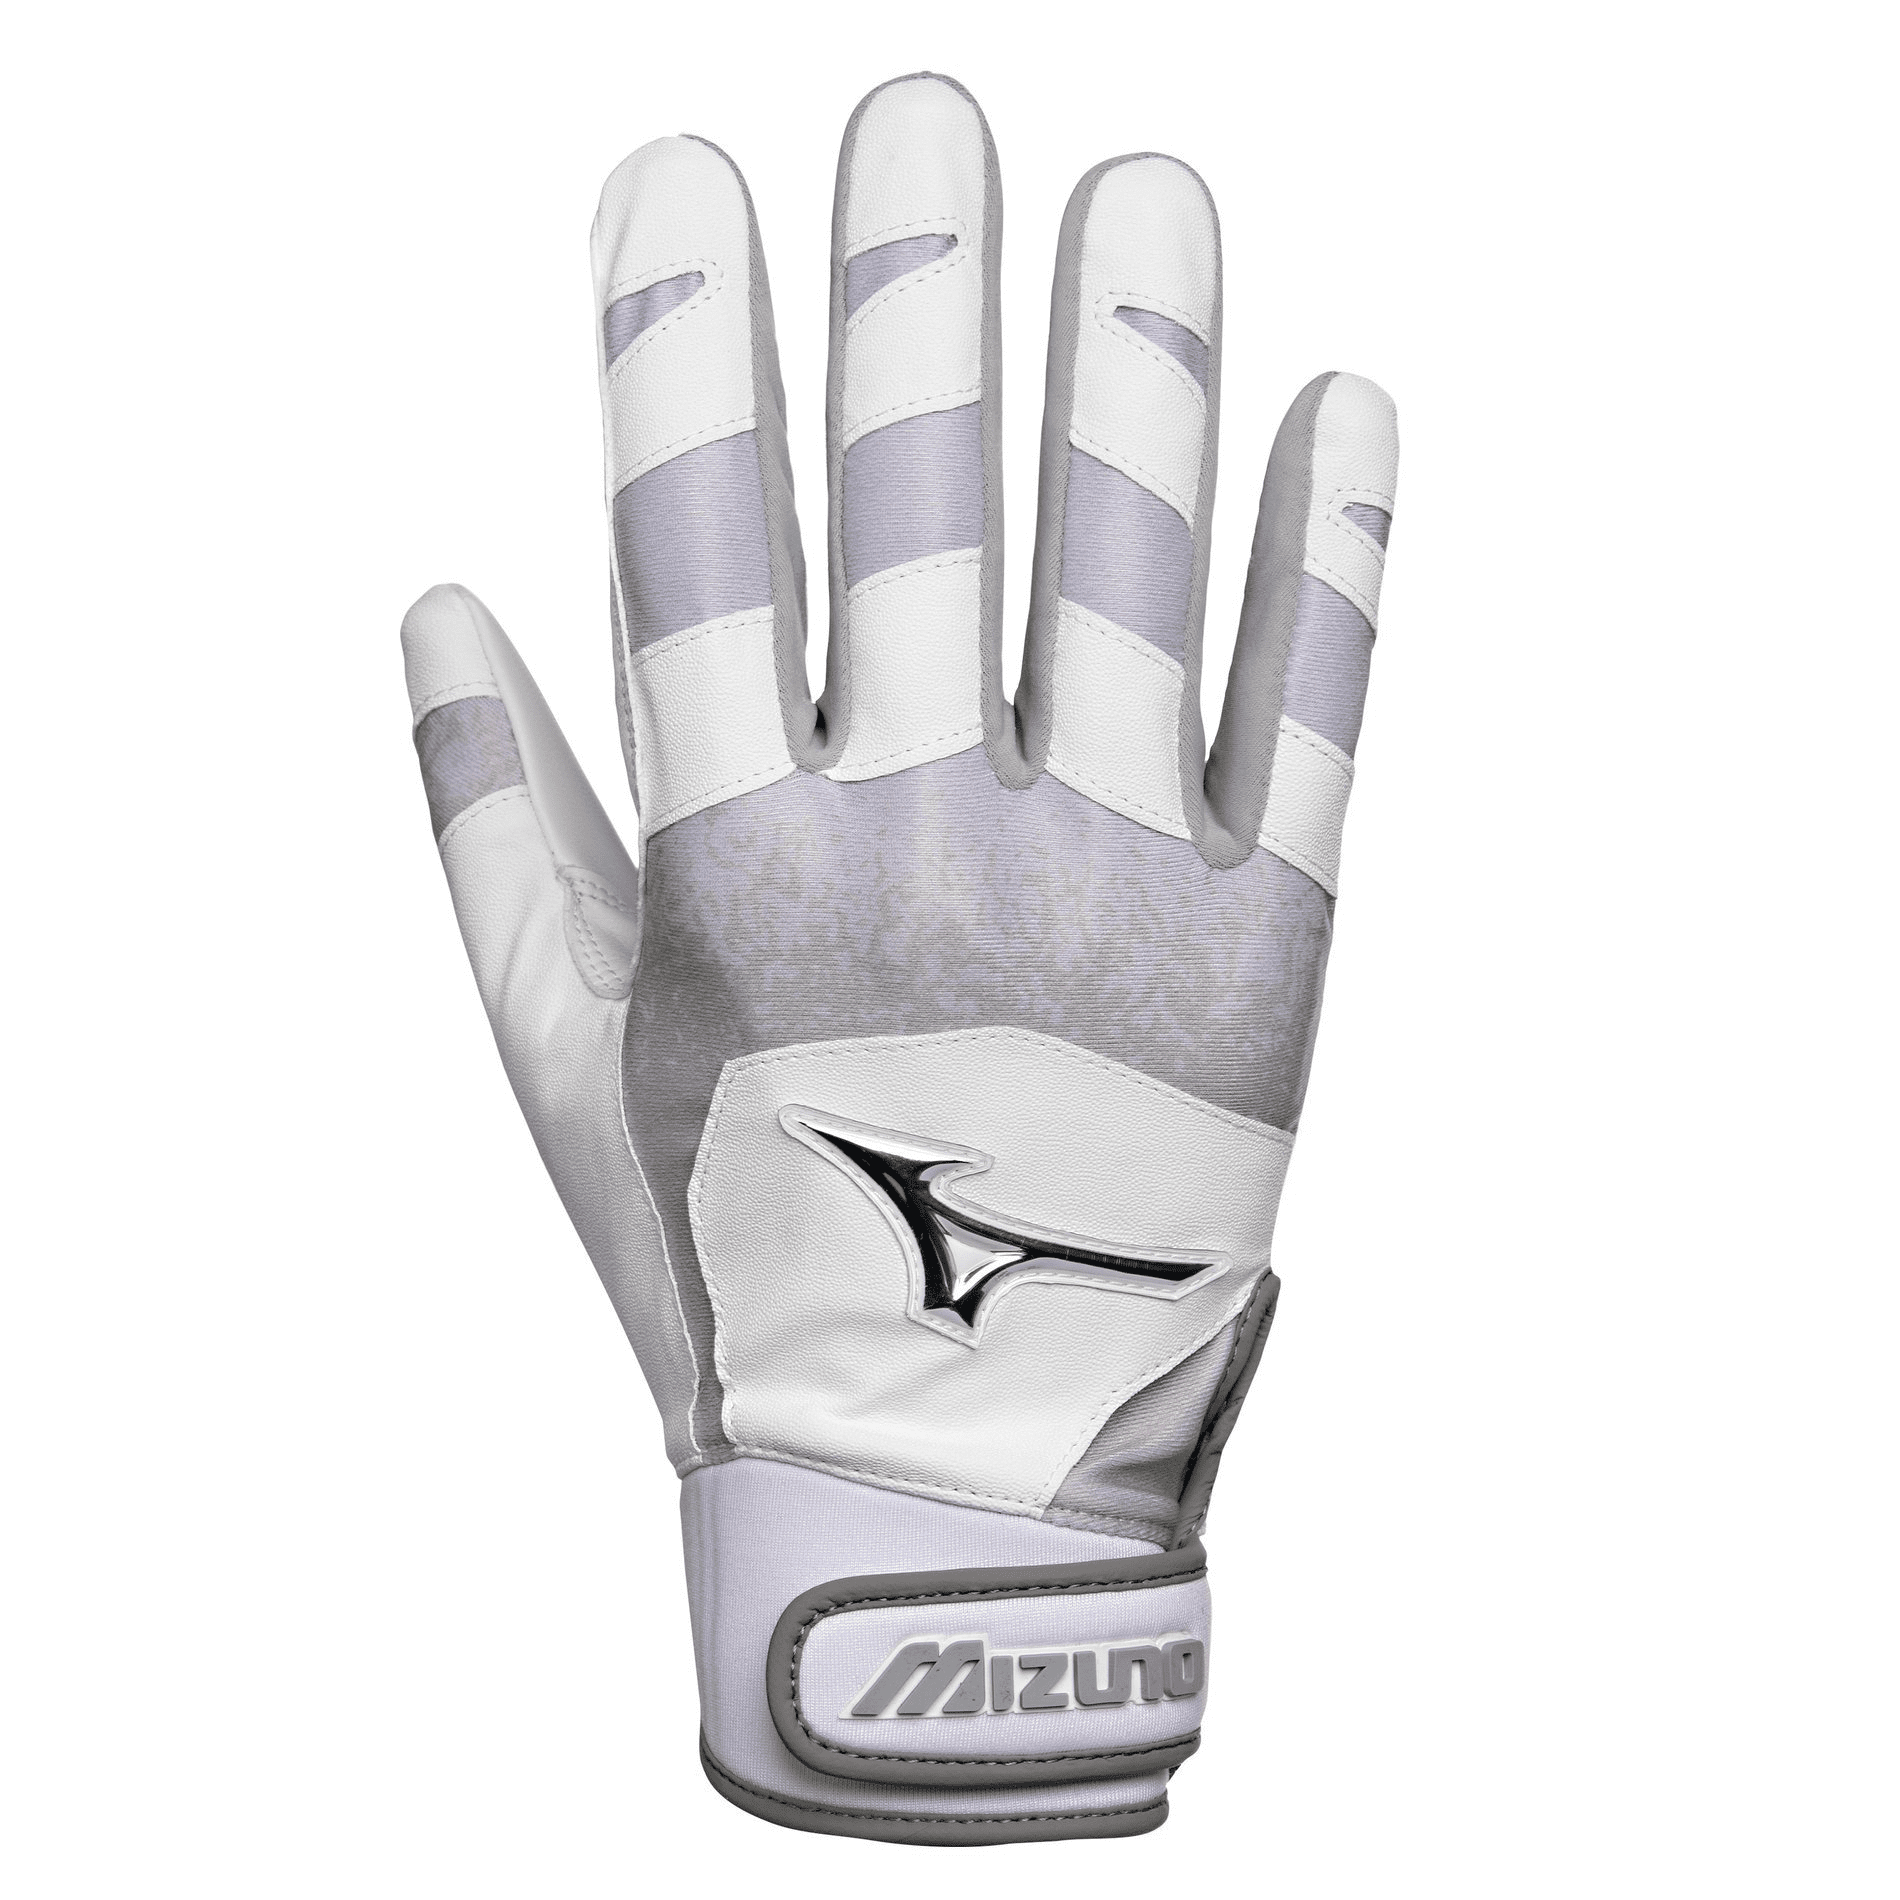 New EvoShield Women's EvoRISE Fastpitch Batting Gloves Large White/Gray 